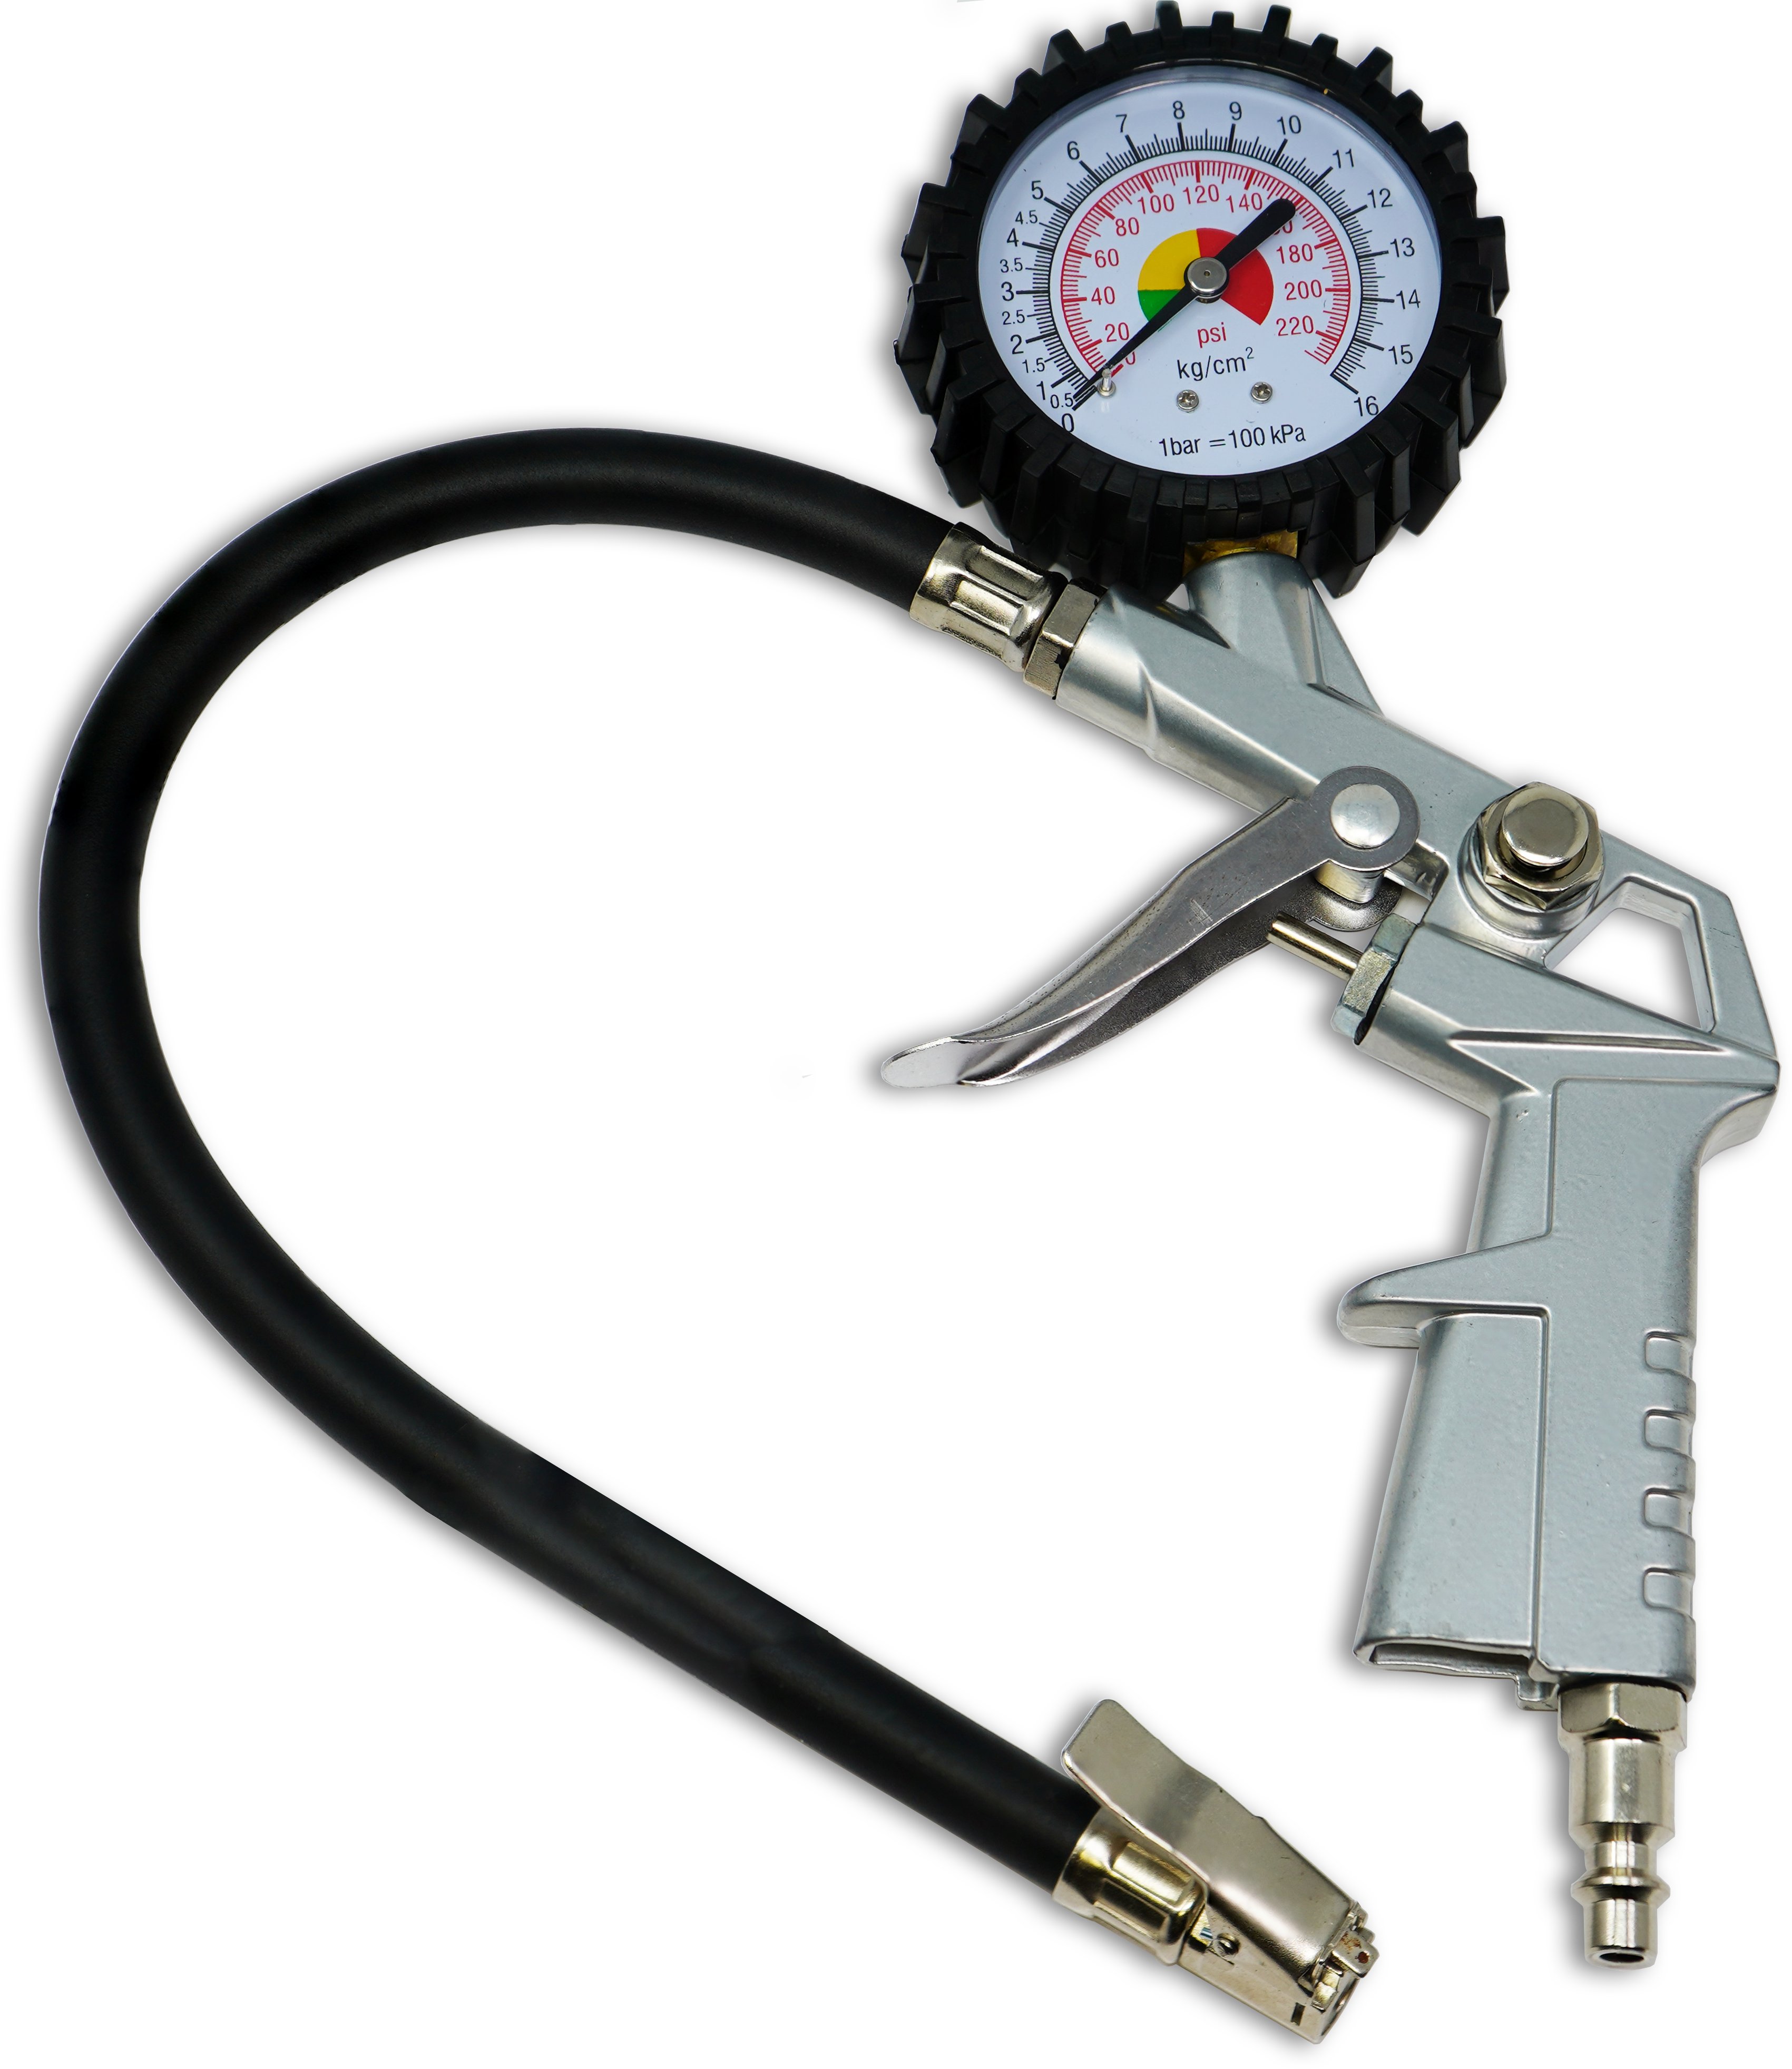 TireMinder Infrared Thermometer TireMinder Automotive Tools TM48FR